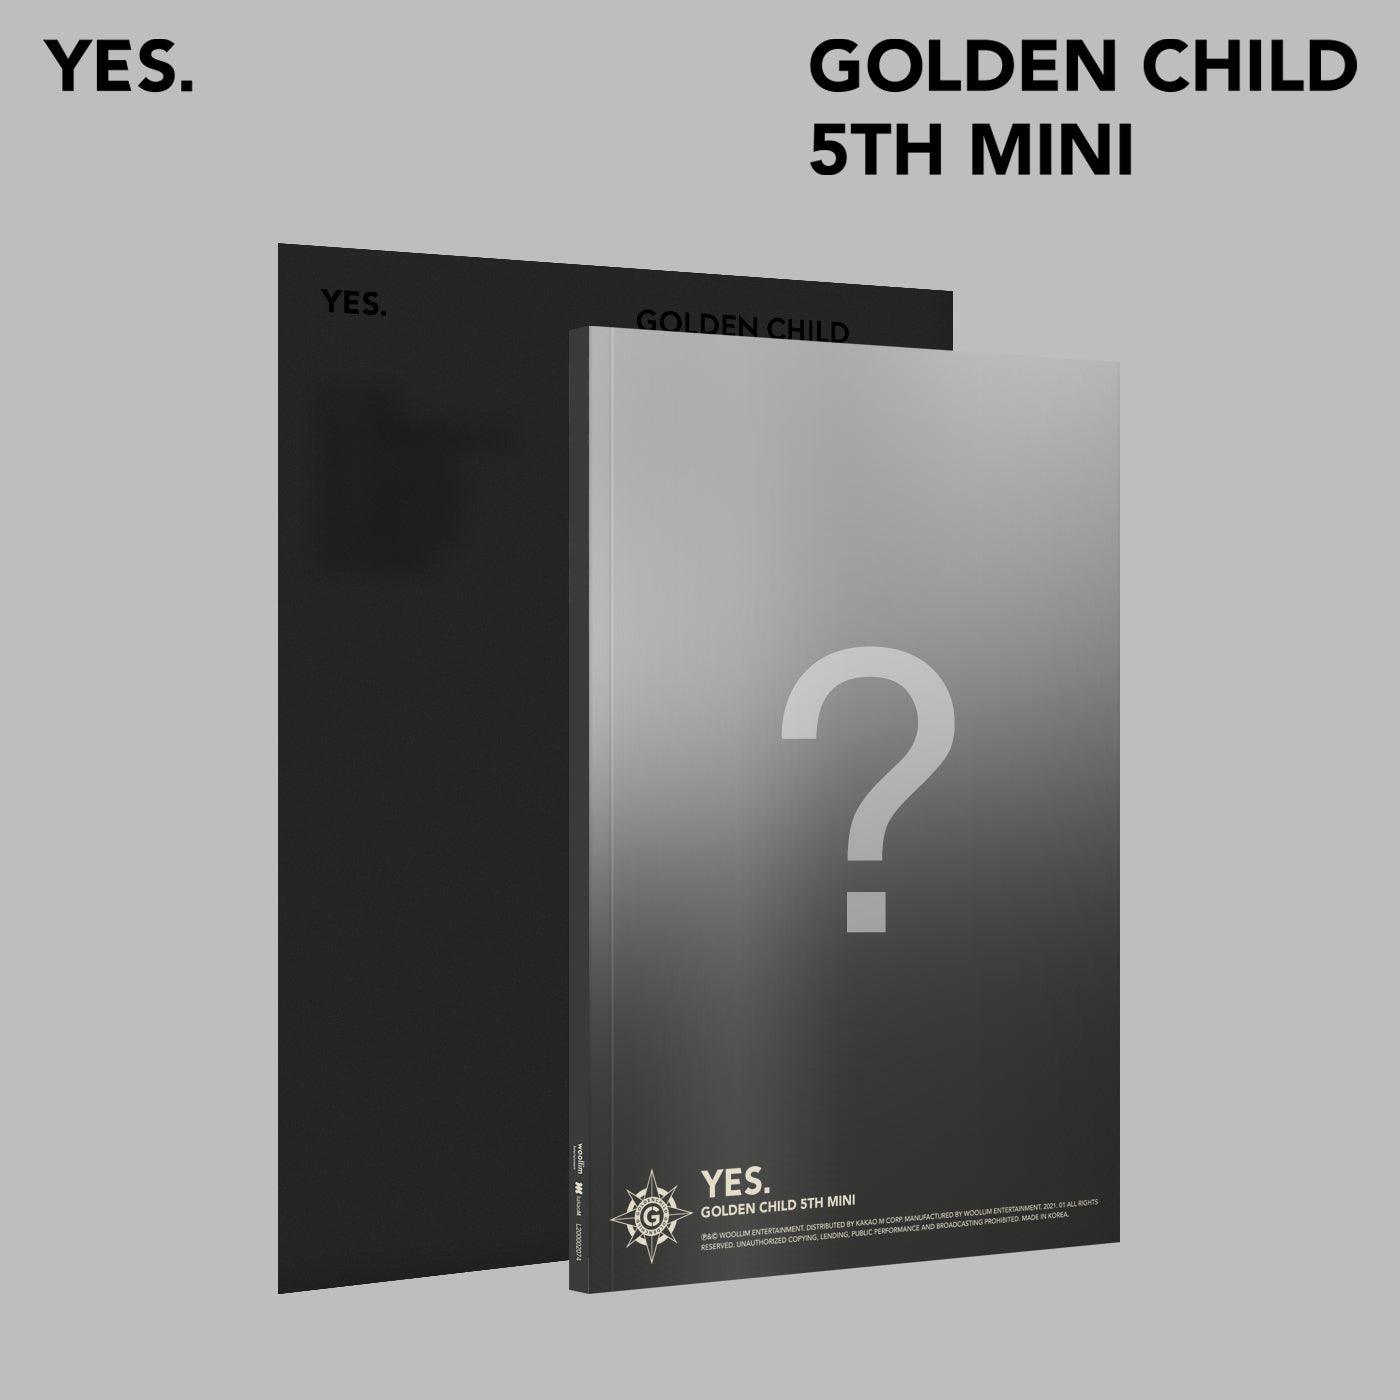 GOLDEN CHILD 5TH MINI ALBUM 'YES.'